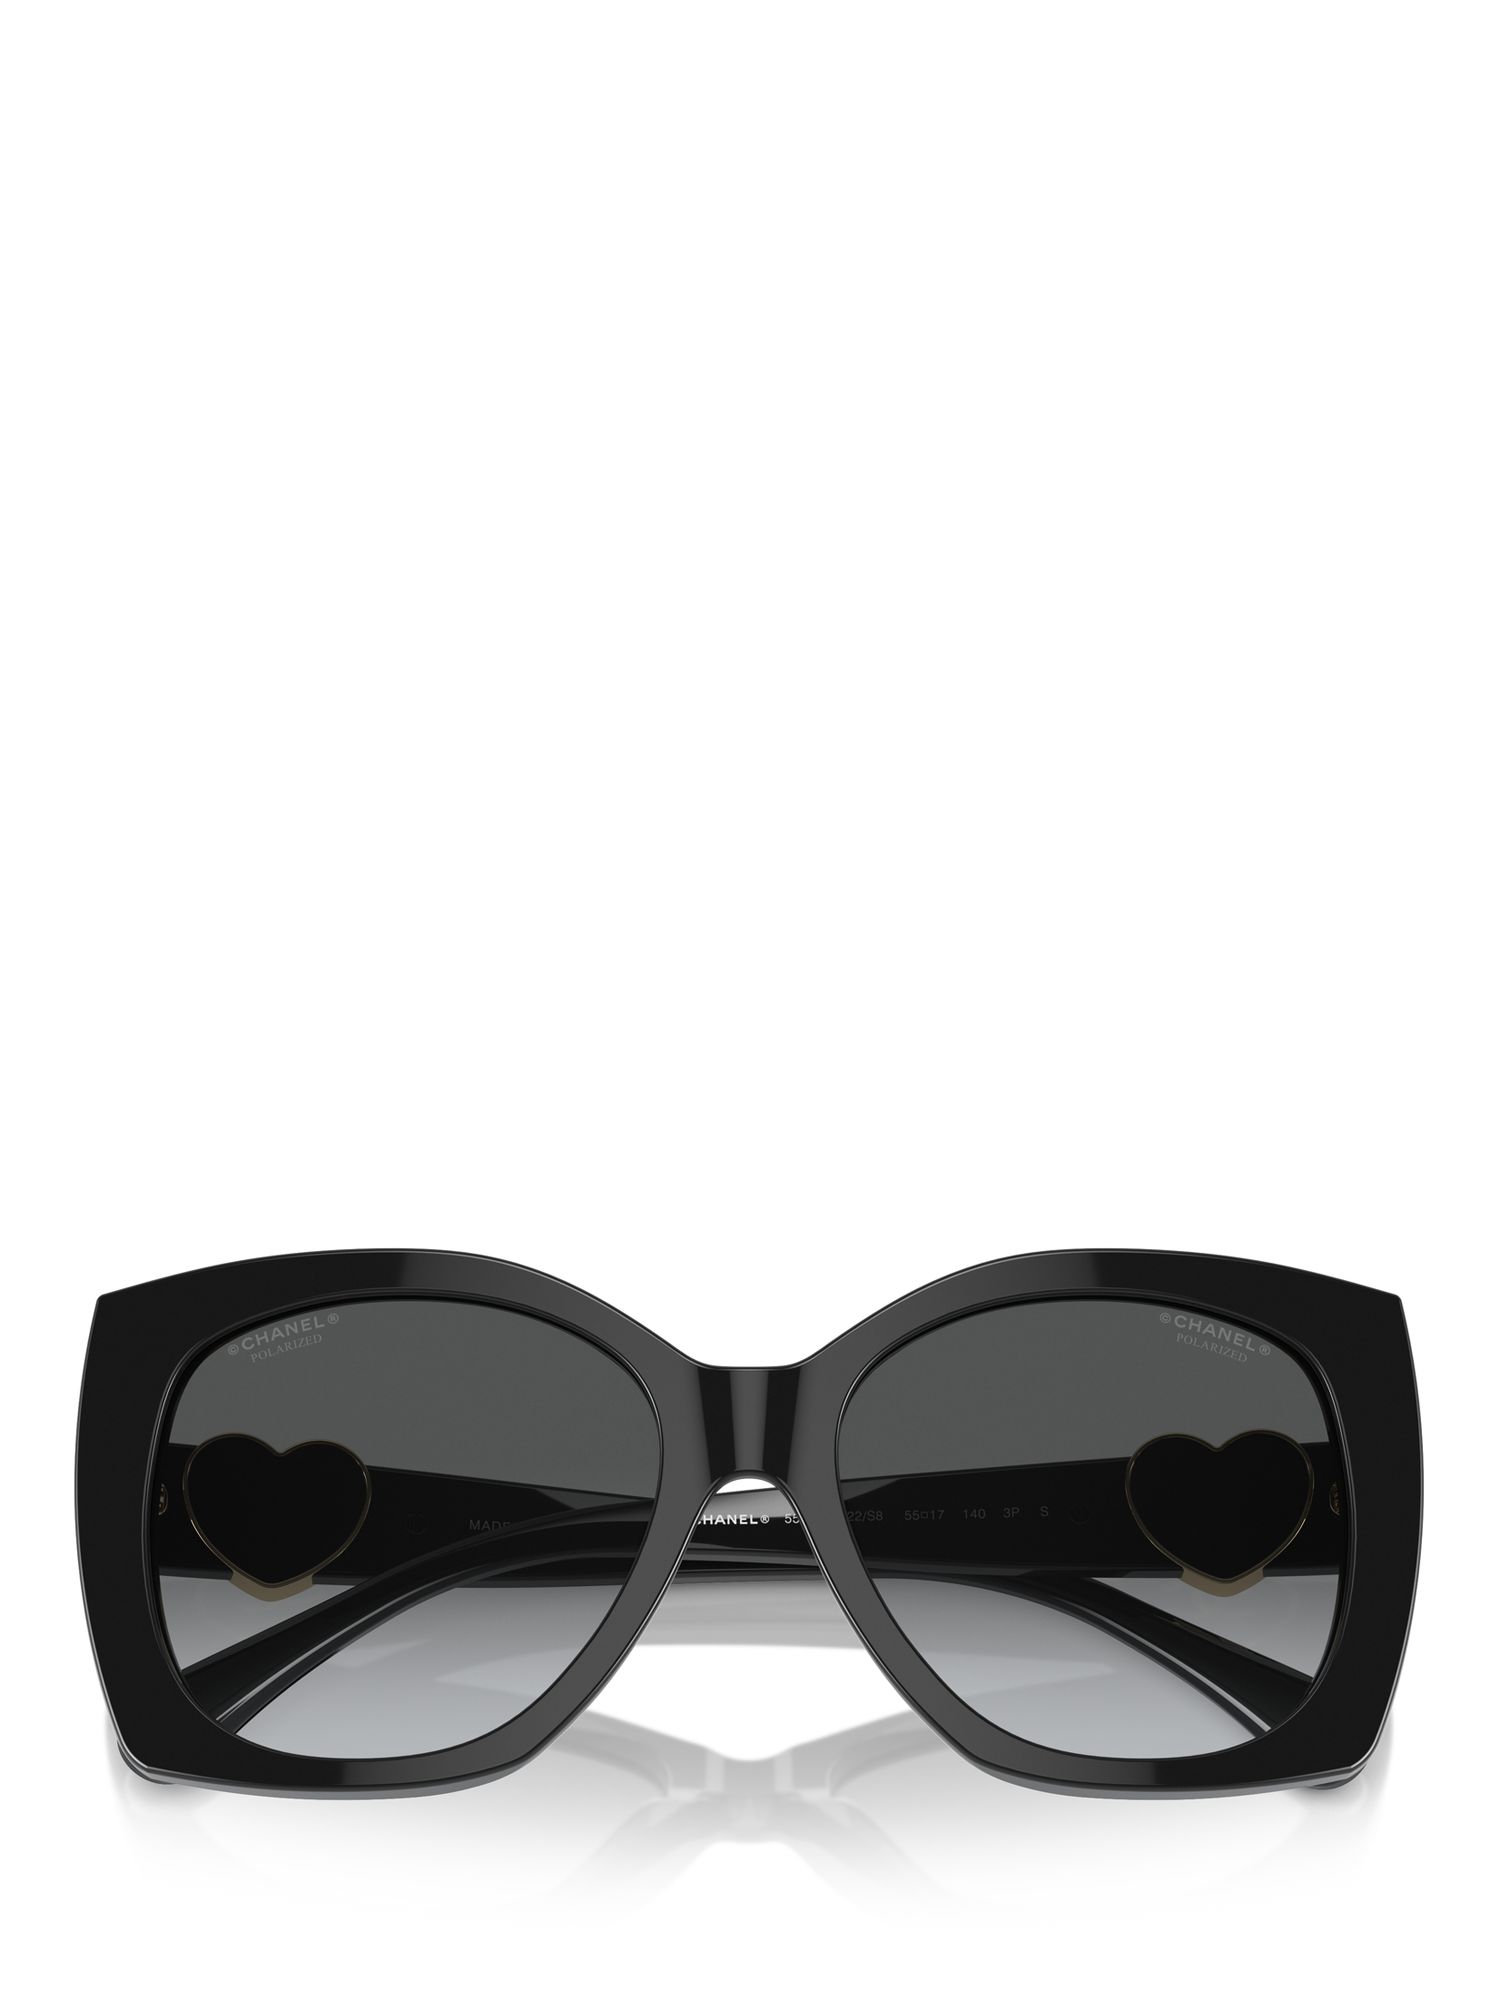 Buy CHANEL Square Sunglasses CH5519 Black/Grey Gradient Online at johnlewis.com